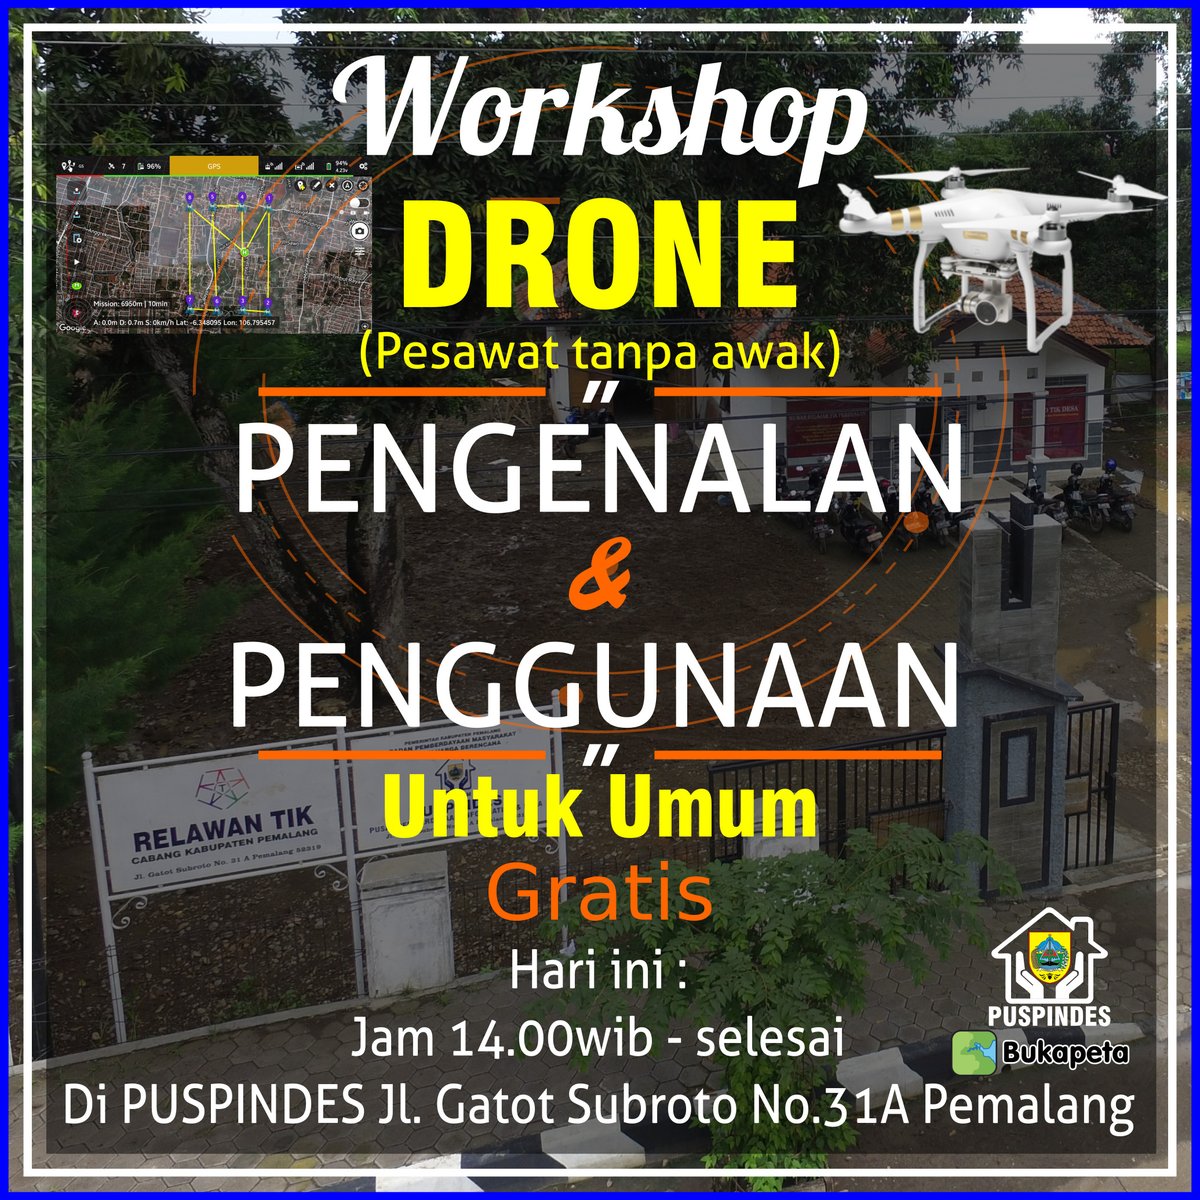 Work Shop Pengenalan dan Penggunaan Drone